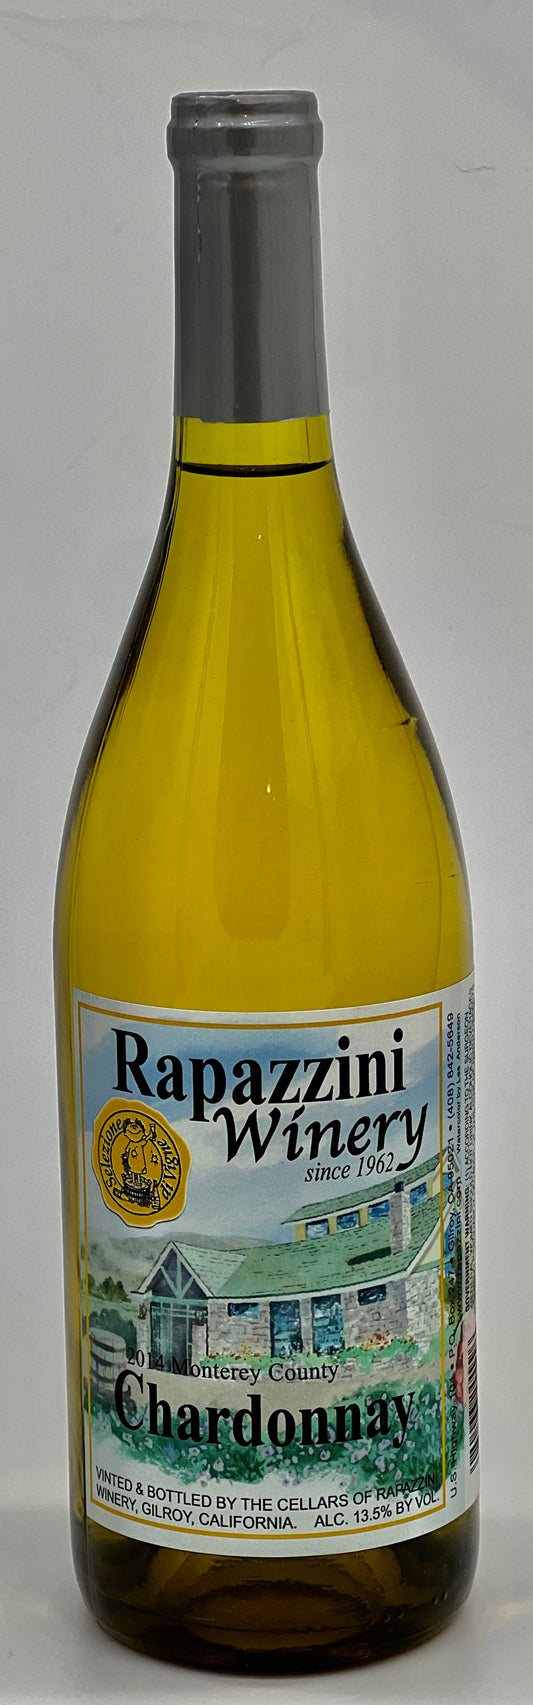 Chardonnay Monterey County 2014 Rapazzini.Wine 750 ml 25 oz 13.5%alcohol $24